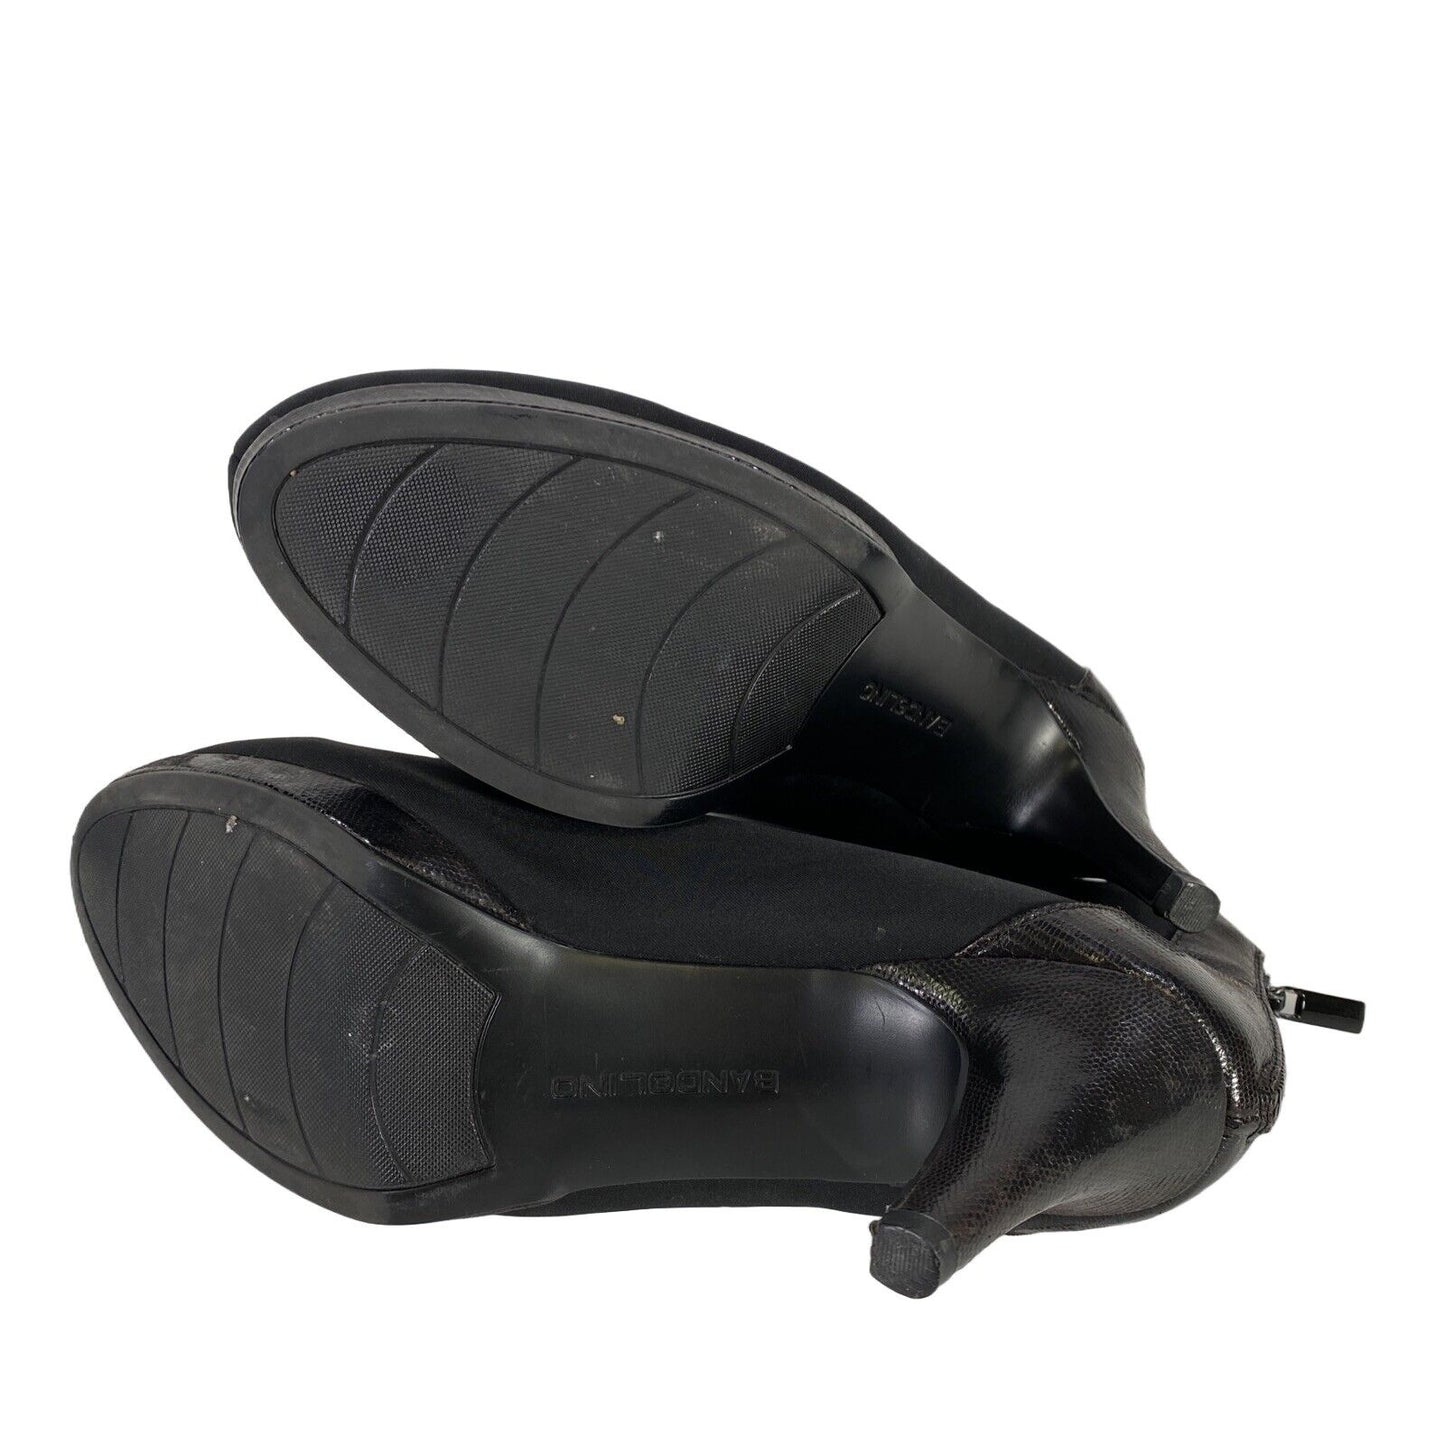 Bandolino Women's Black Fabric Back Zip Ankle Bootie Heels - 9.5 M